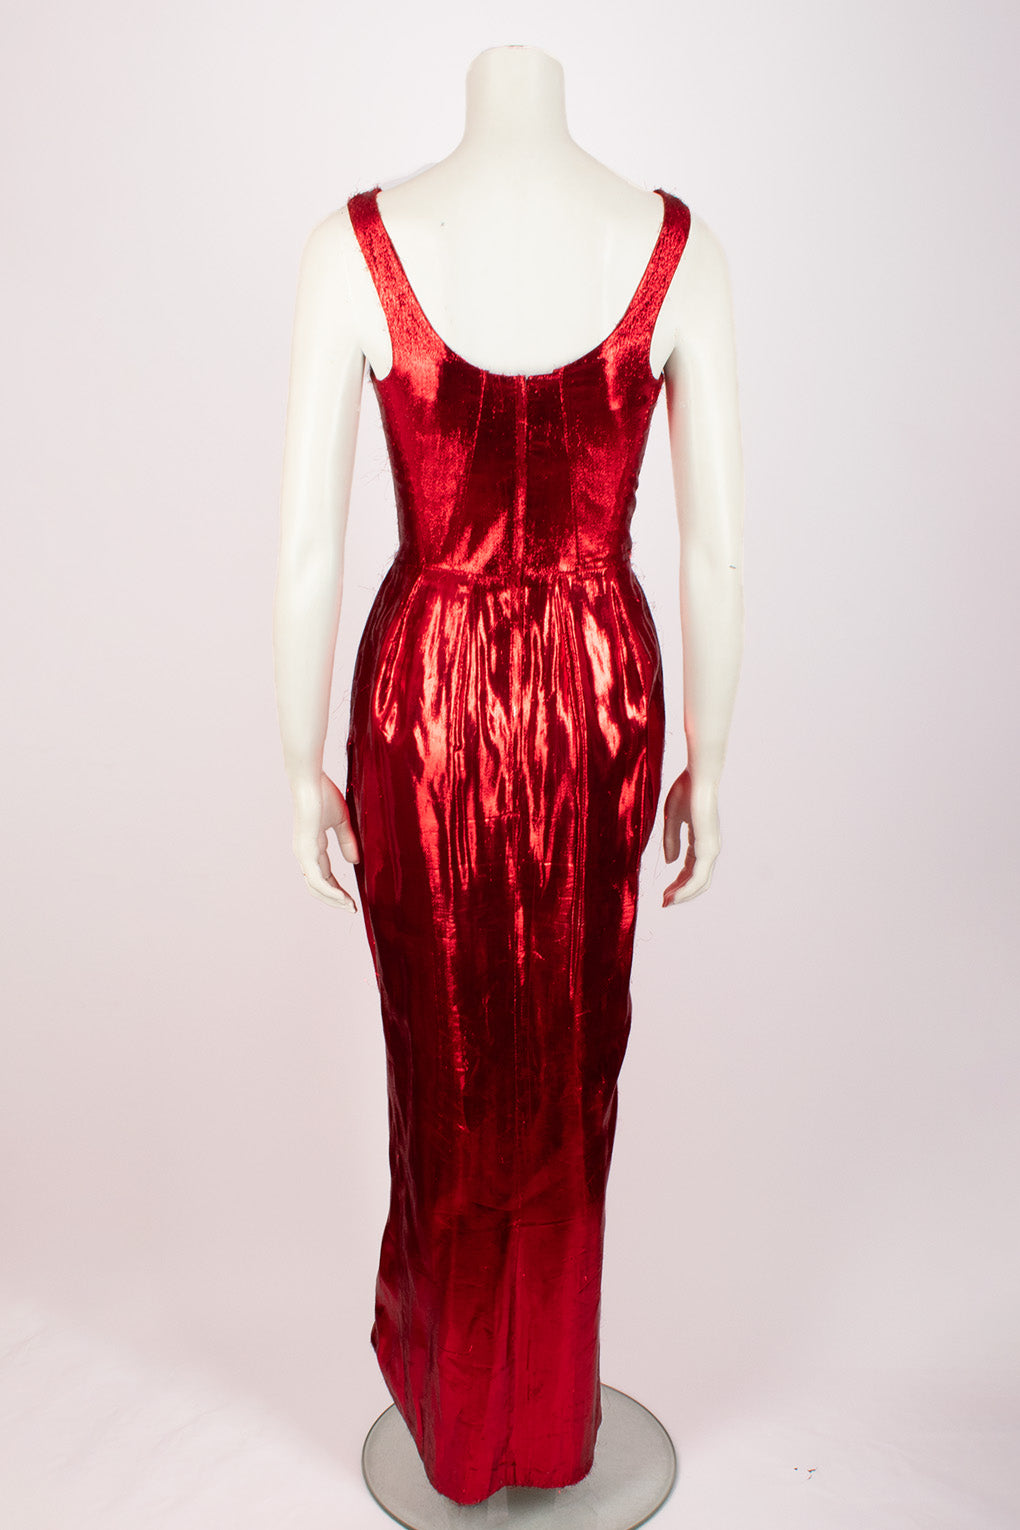 ANTONY PRICE Red Lamé Dress